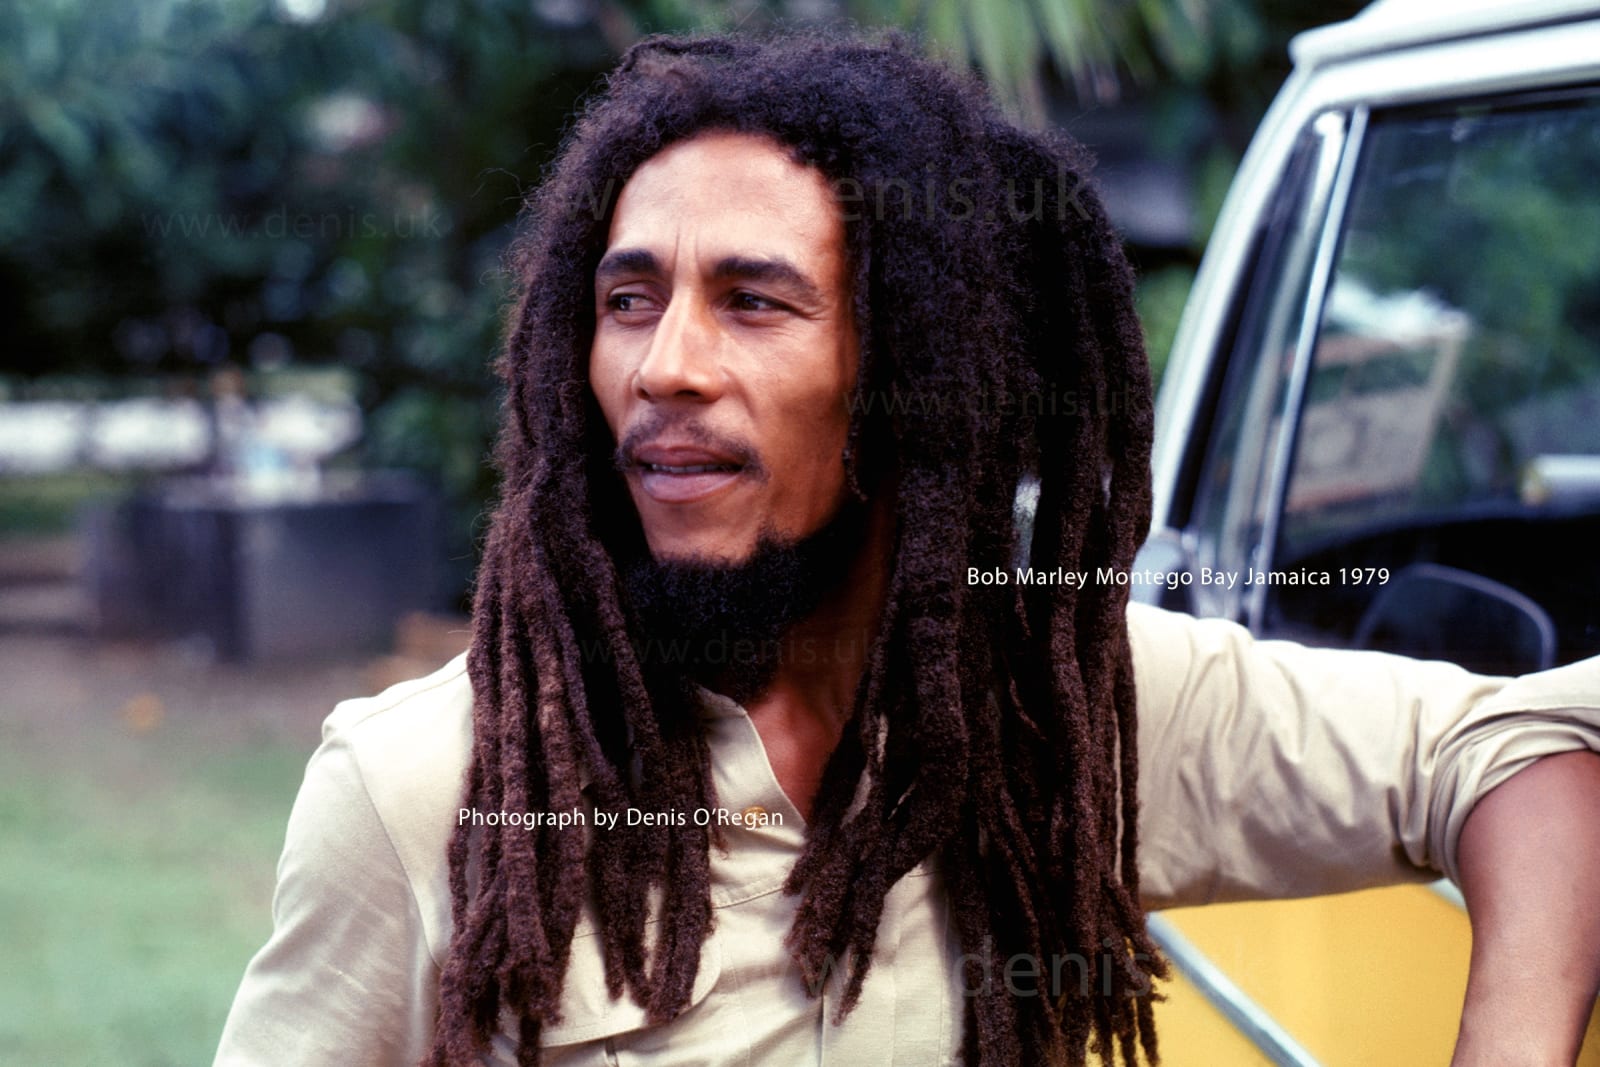 BOB MARLEY, Bob Marley Montego Bay Jamaica, 1979